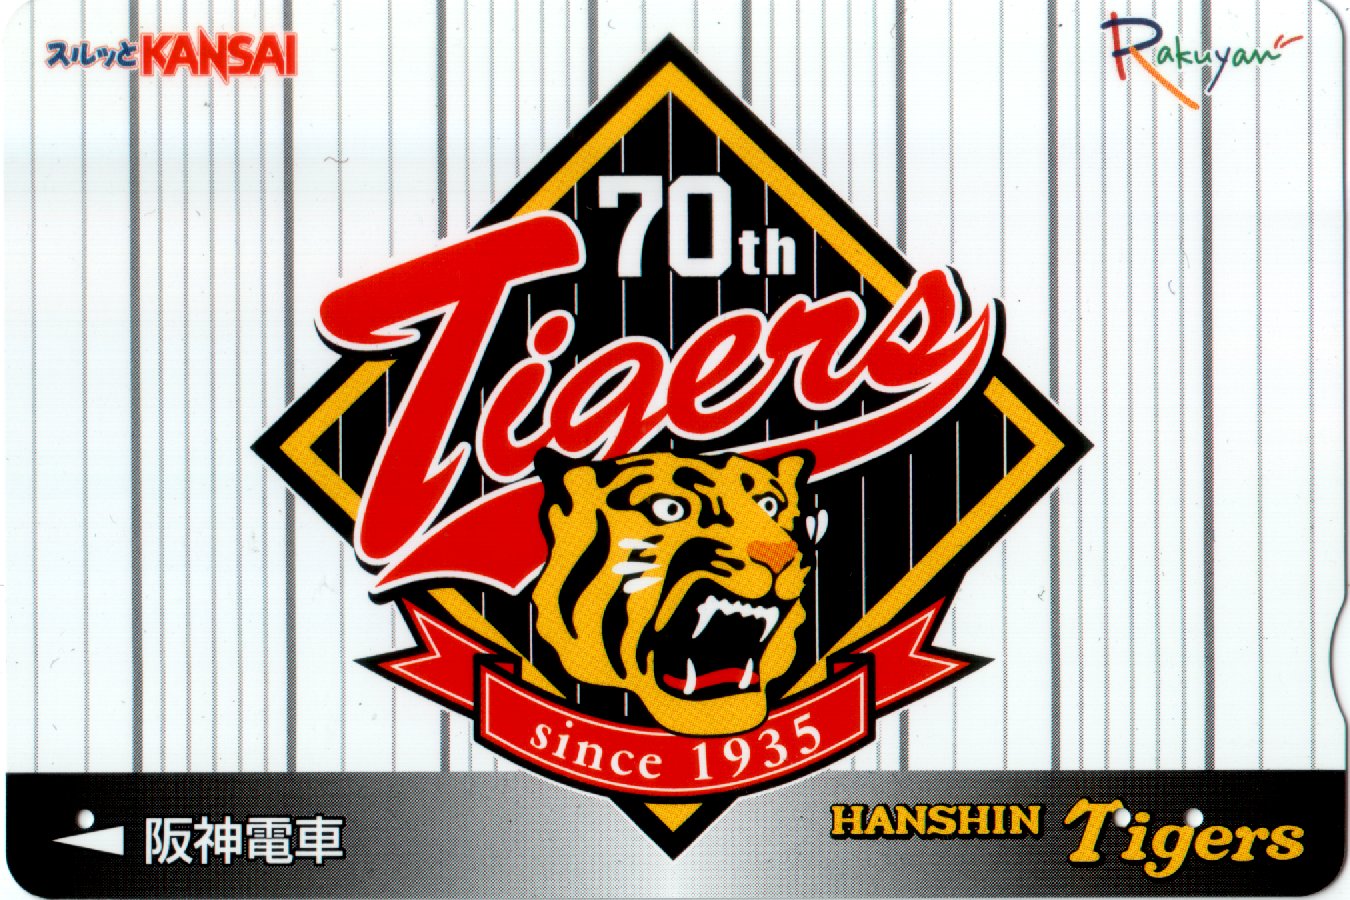 Hanshin Tigers 70th Anniversary